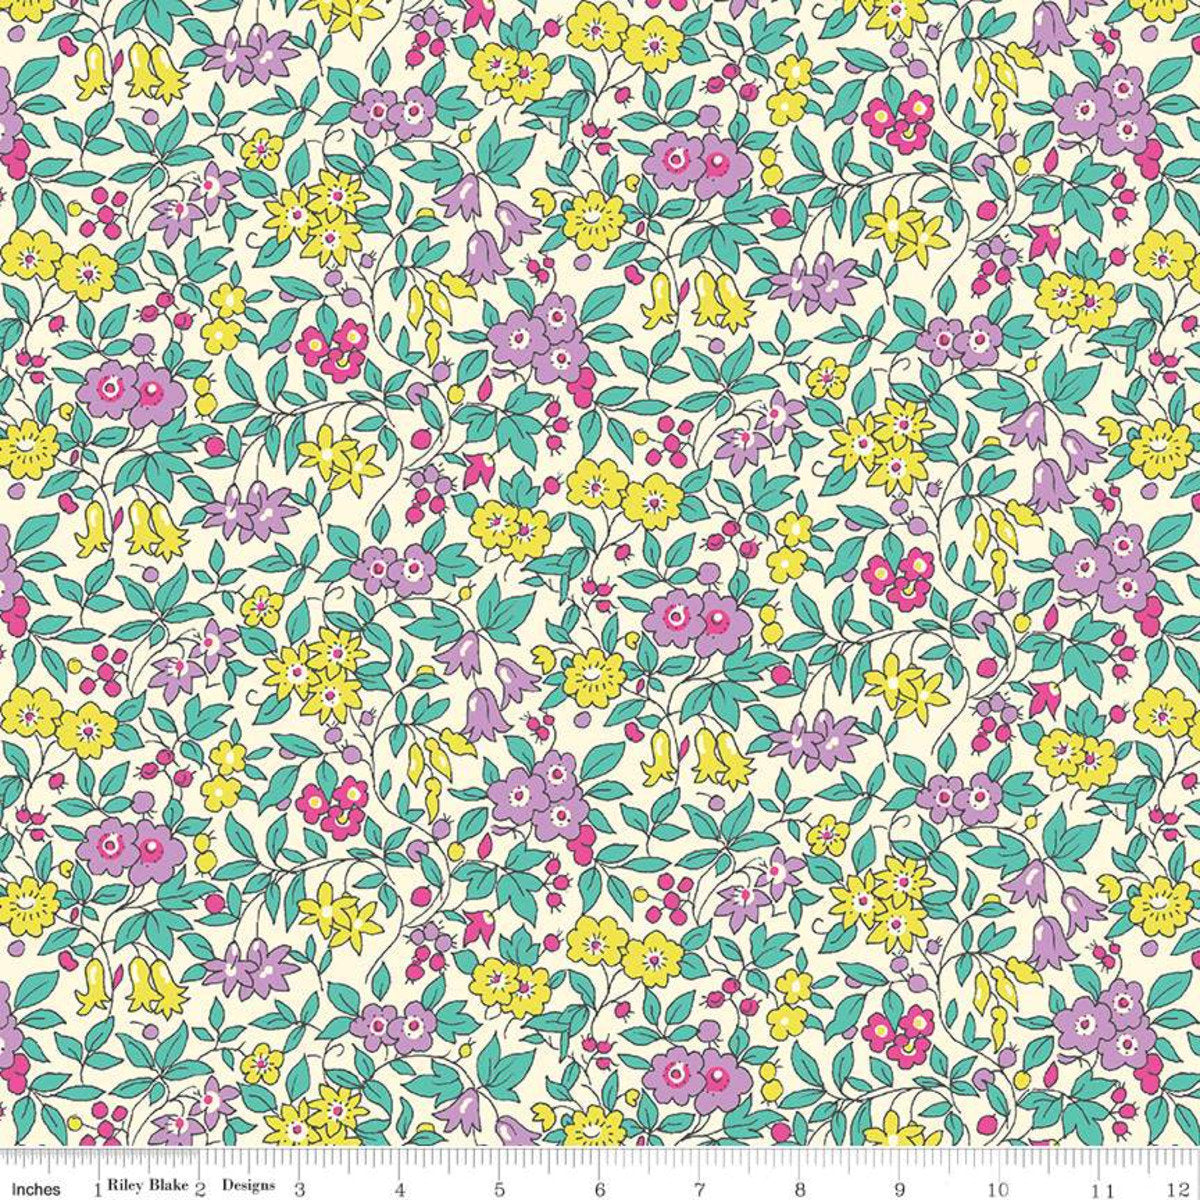 High Summer Flower Show Forget Me Not Blossom B - Riley Blake Designs half yard fabric - Liberty of London purple